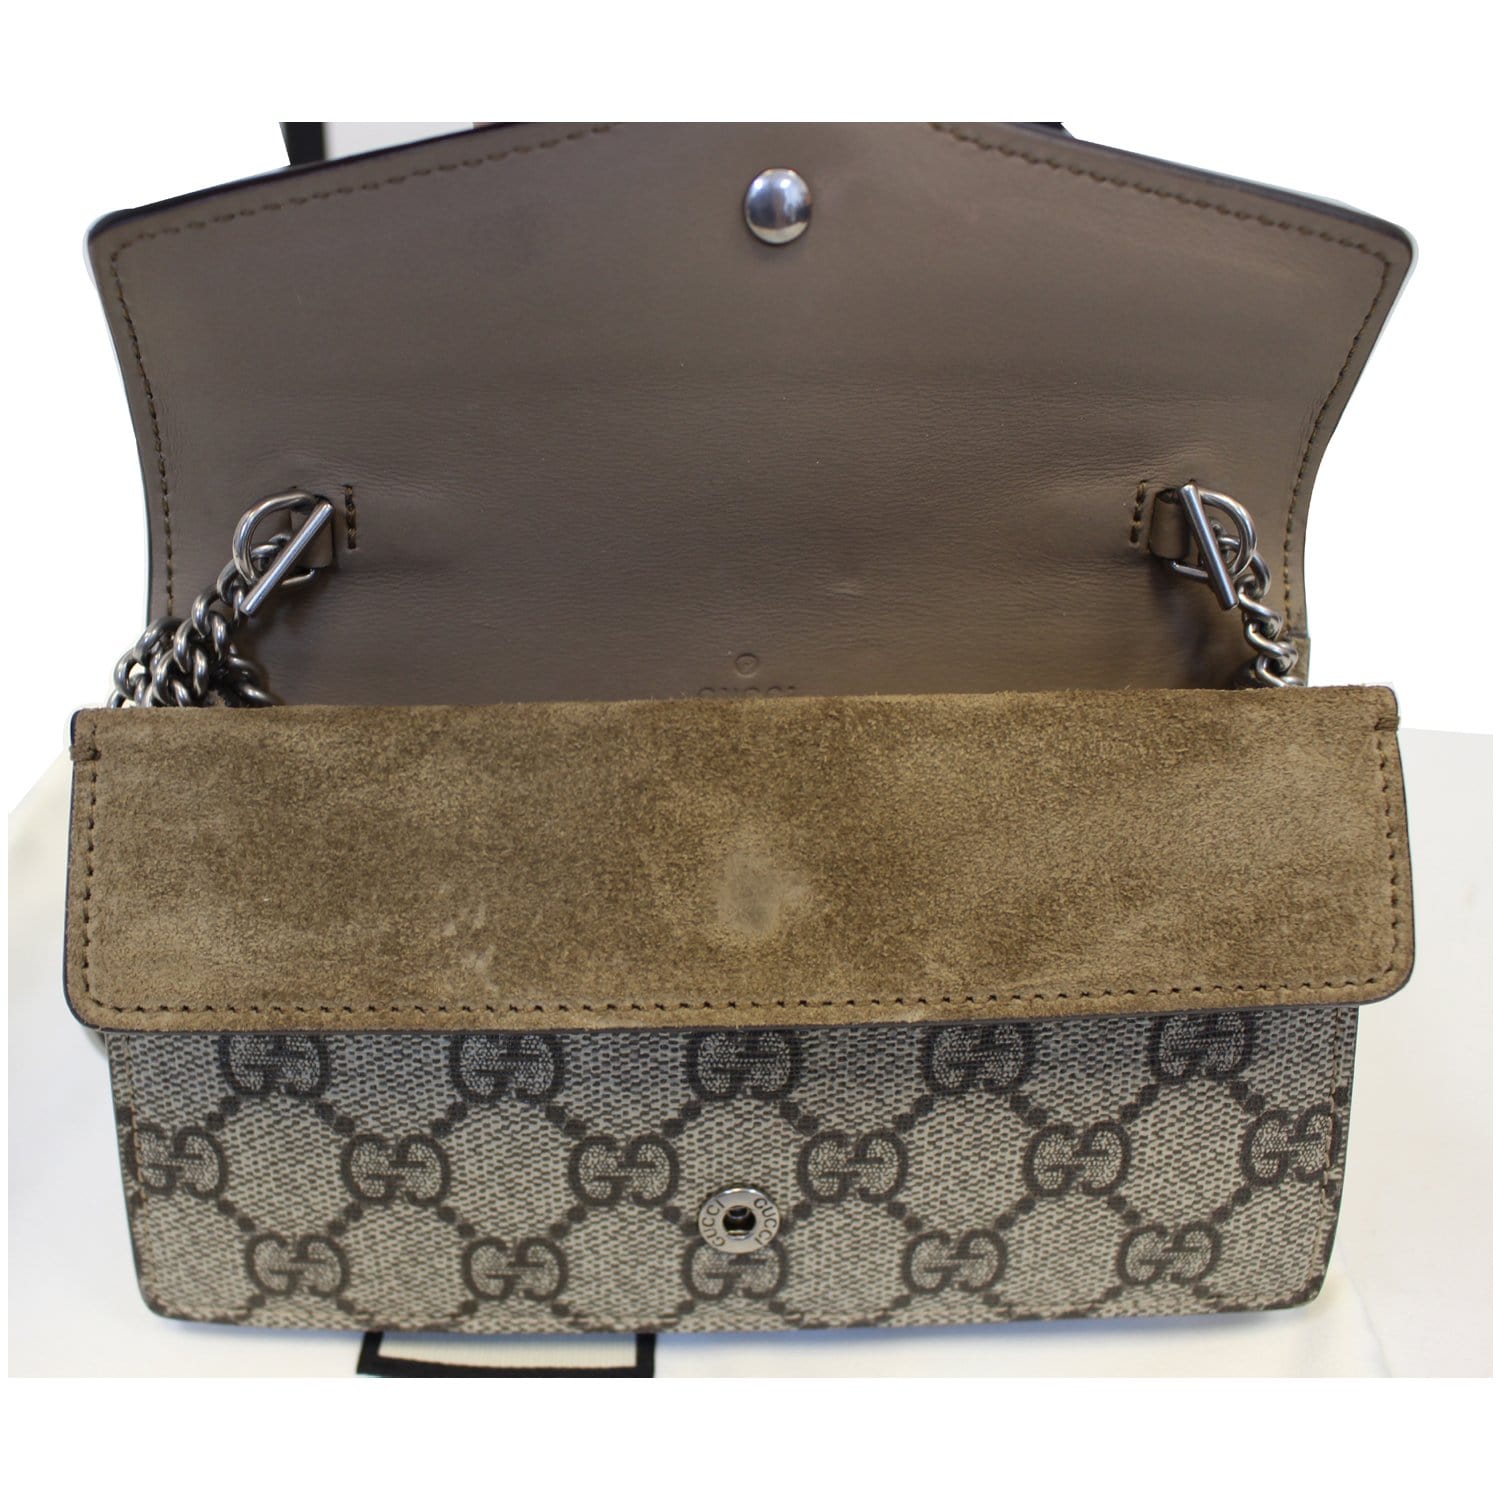 Gucci Dionysus GG Supreme Super Mini Crossbody Bag for Women